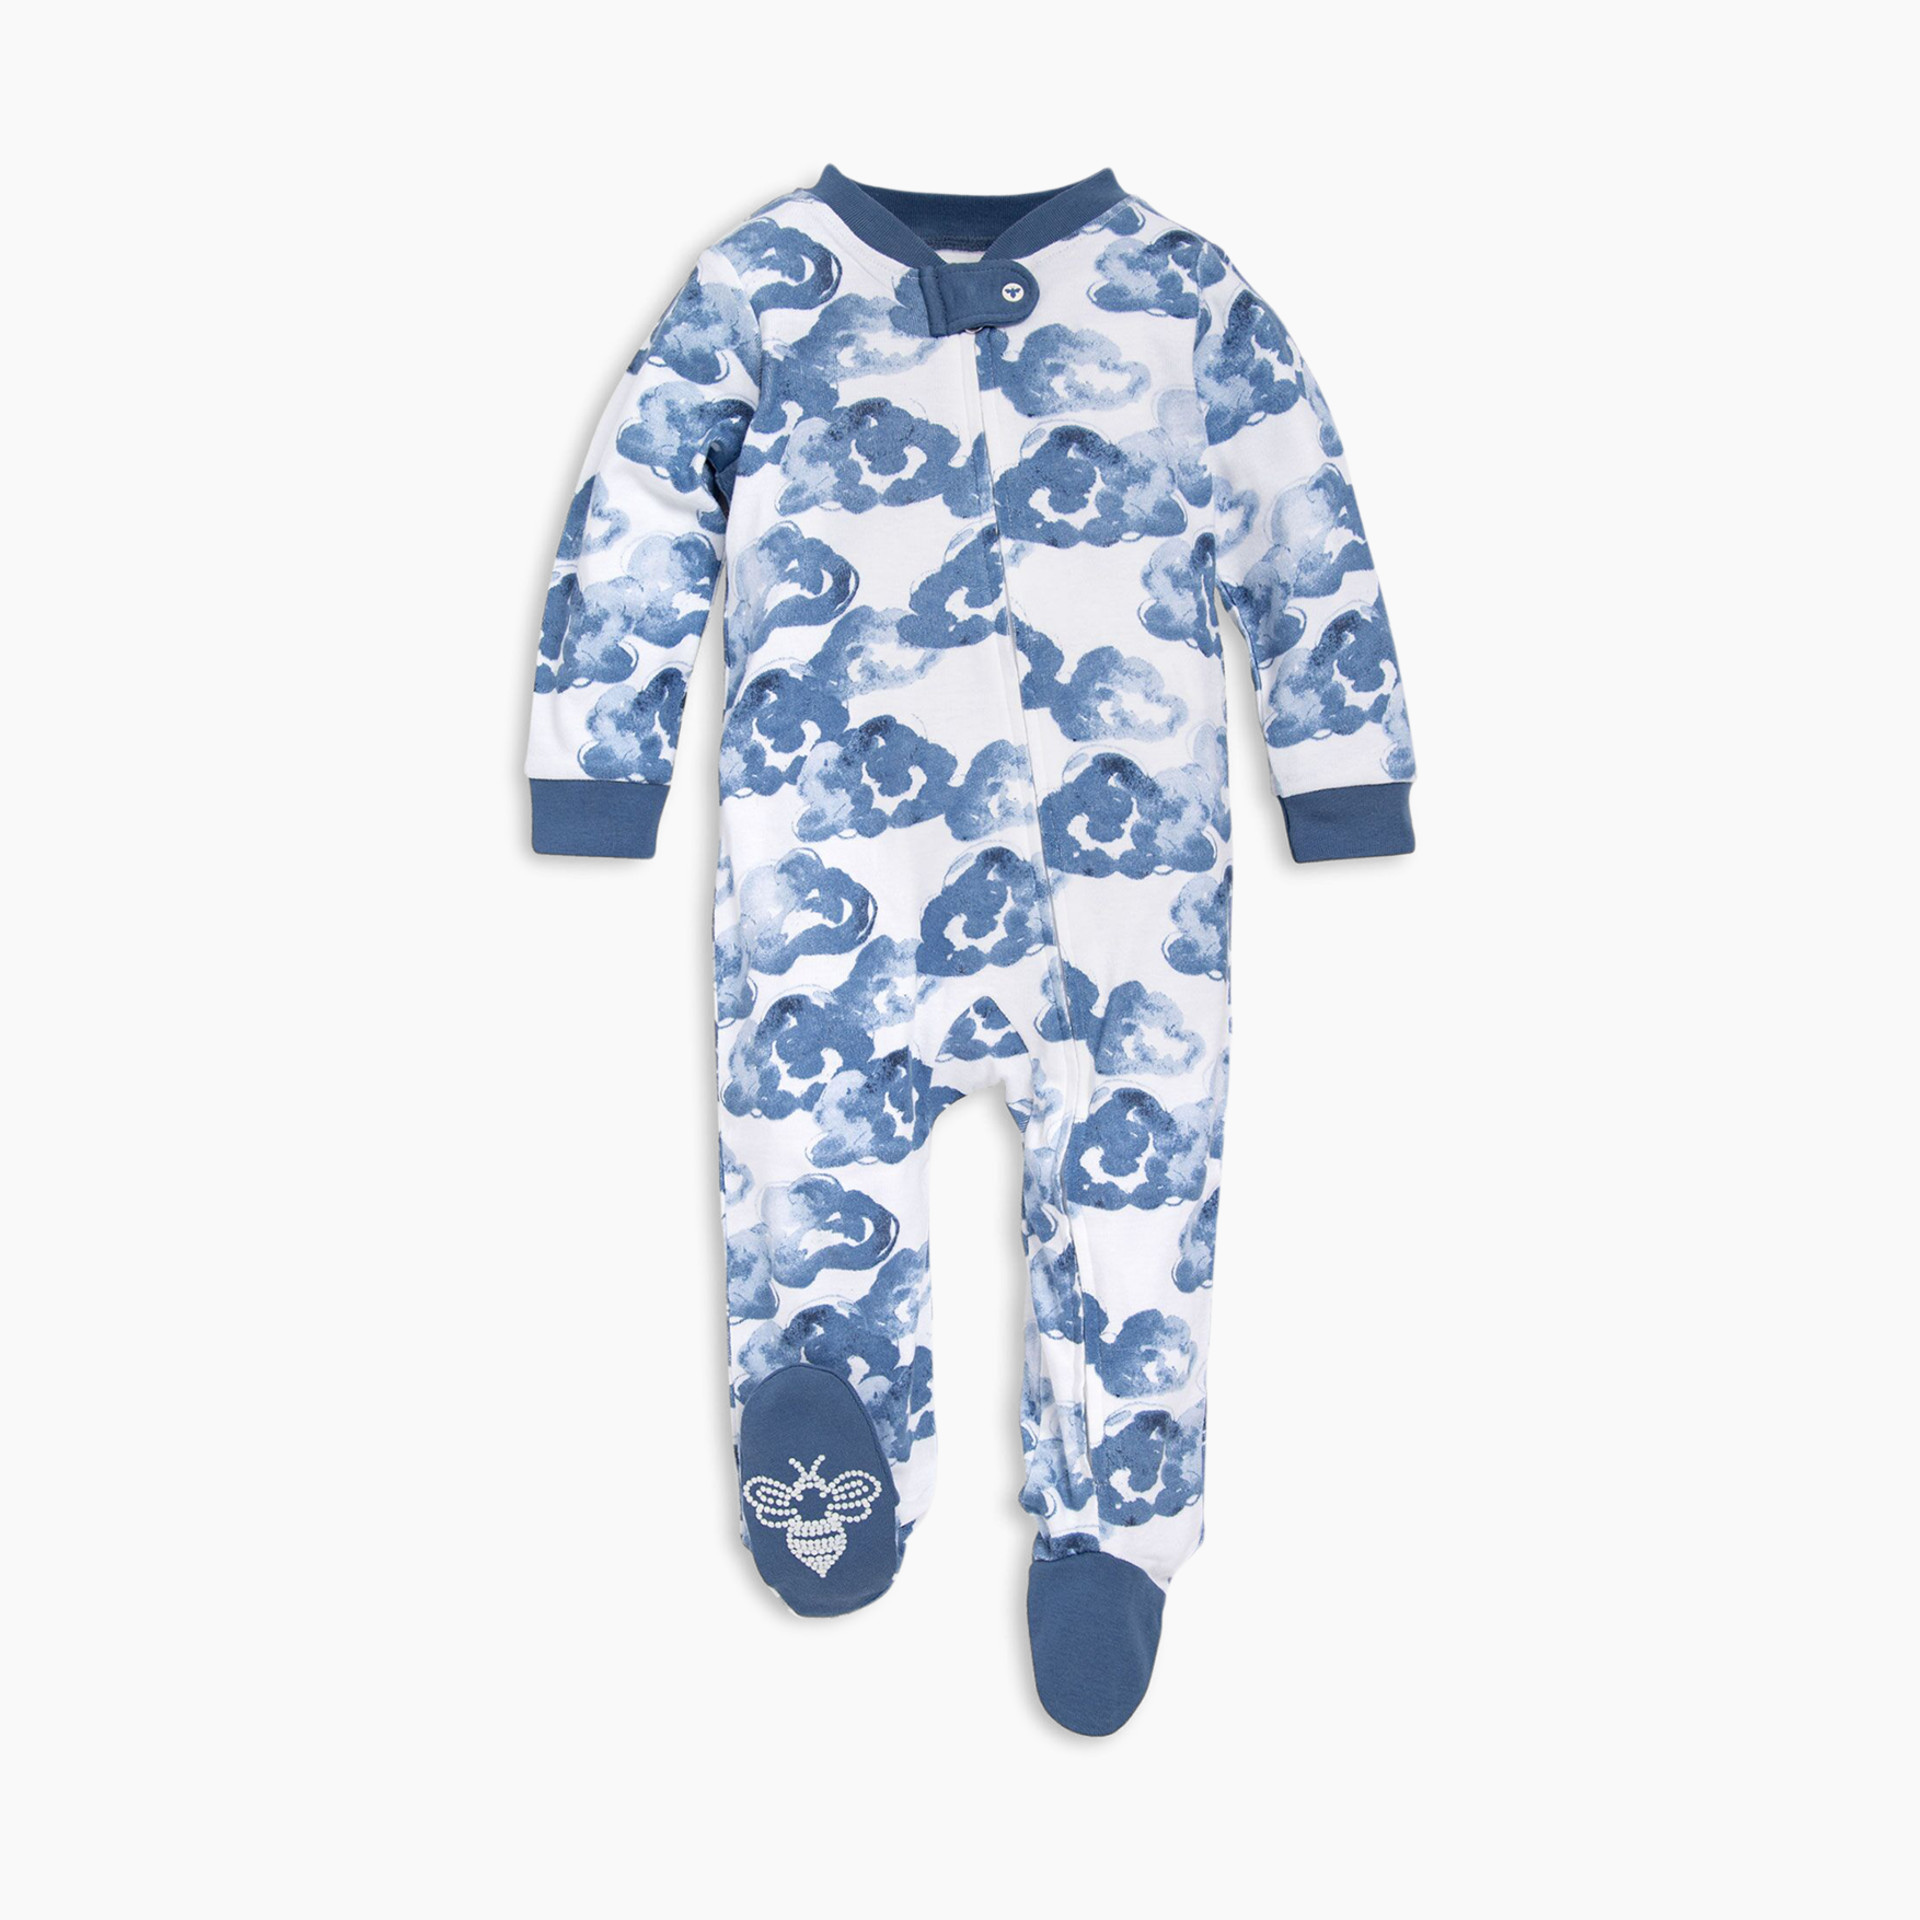 Burt's Bees Baby Organic Sleep & Play Footie Pajamas - Moonlight Clouds,  0-3 Months